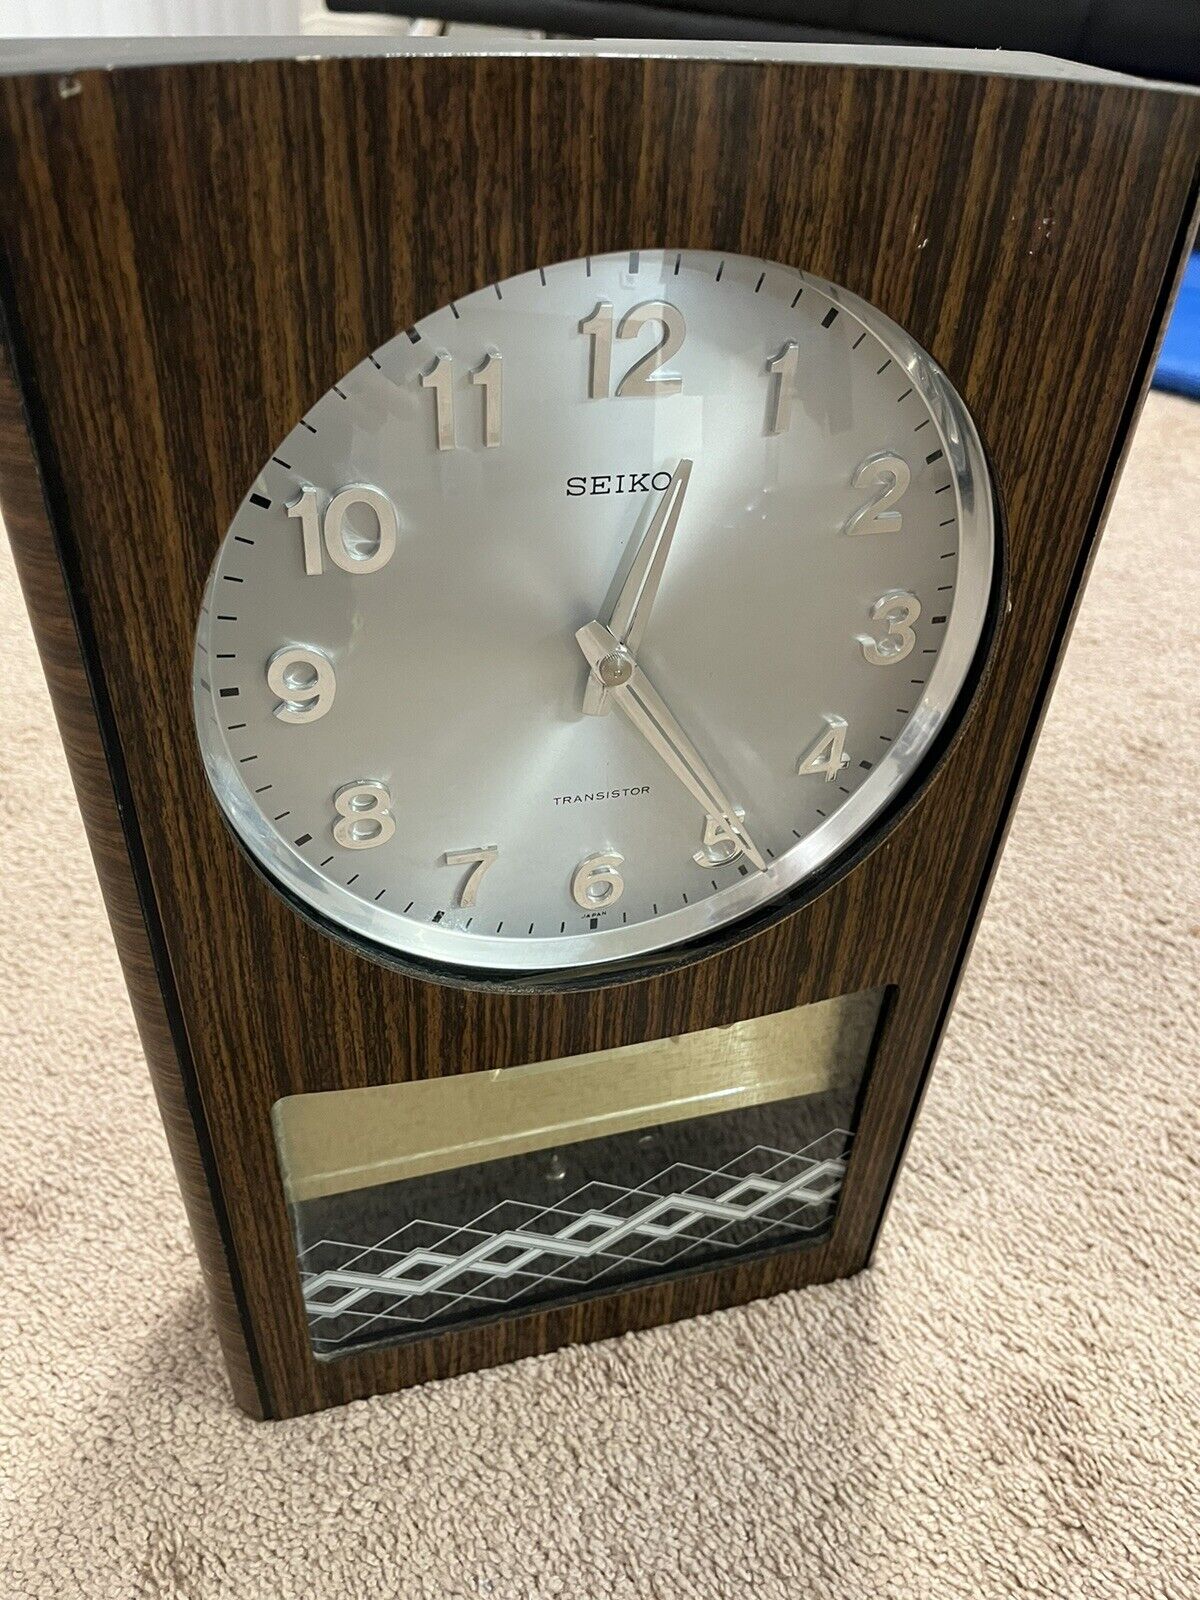 Seiko Vintage Transistor Wall Clock Pendulum Day Date Calendar Japan Works